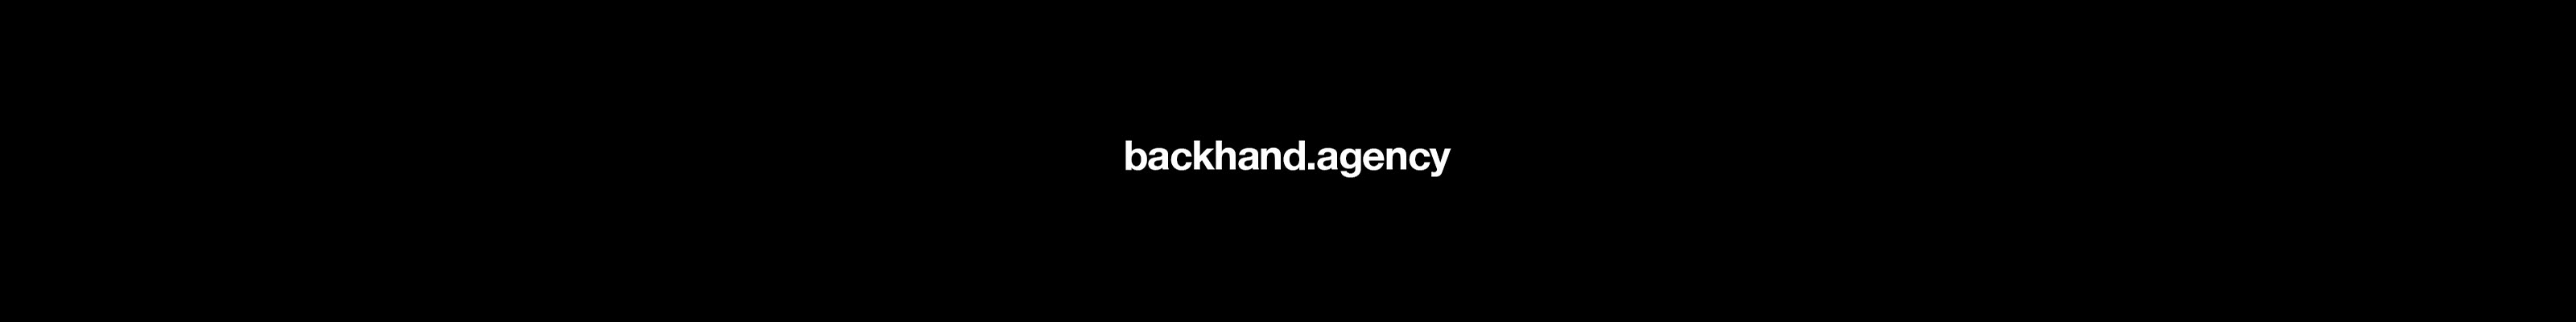 Backhand ®'s profile banner